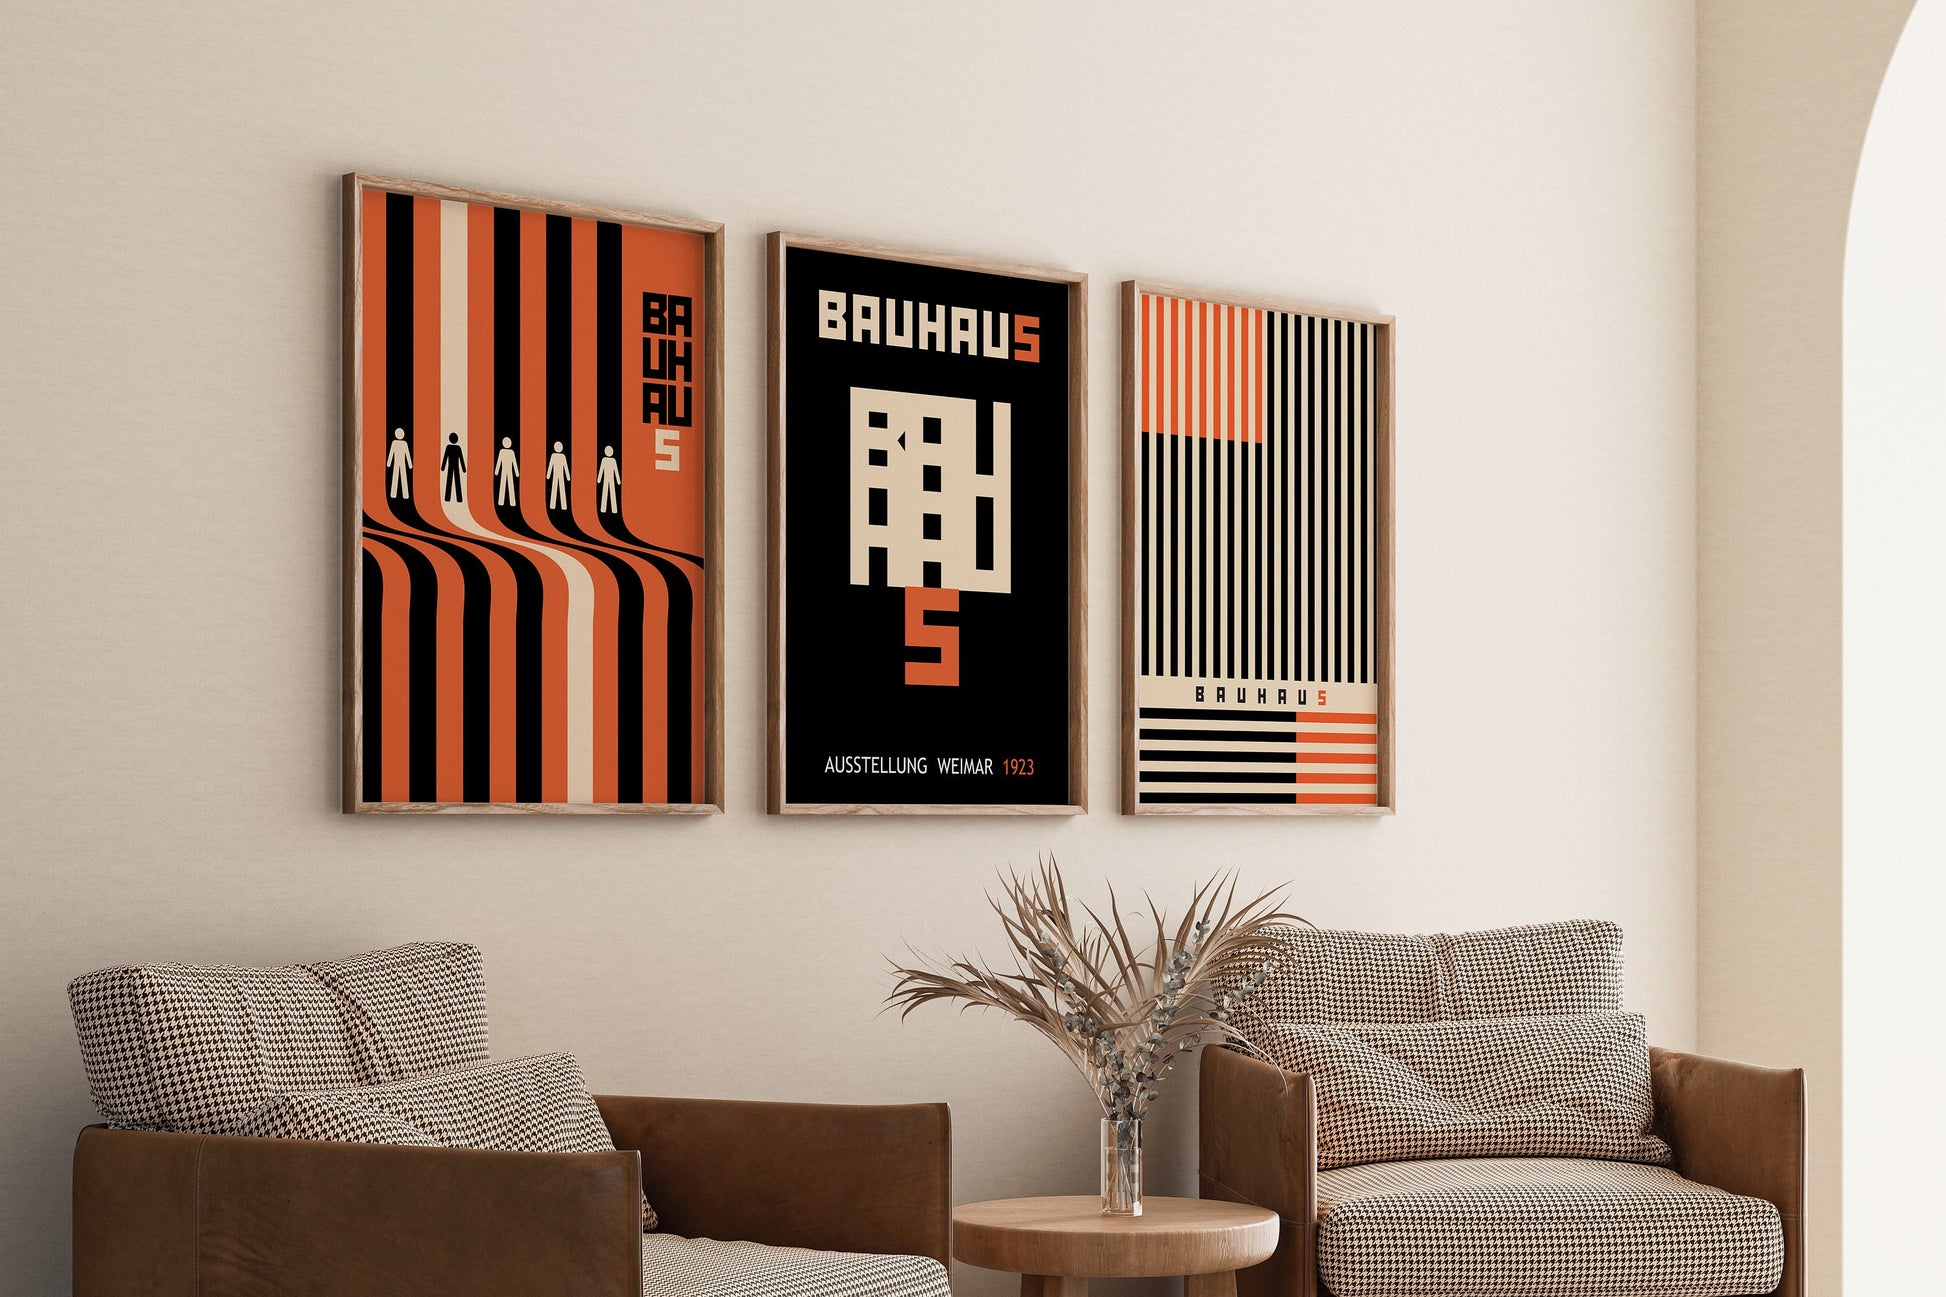 Set of 3 Bauhaus Black Orange Posters Mid-Century Museum Modern Art Print 60s Vintage Minimalist Framed Ready to Hang Home Office Decor Gift